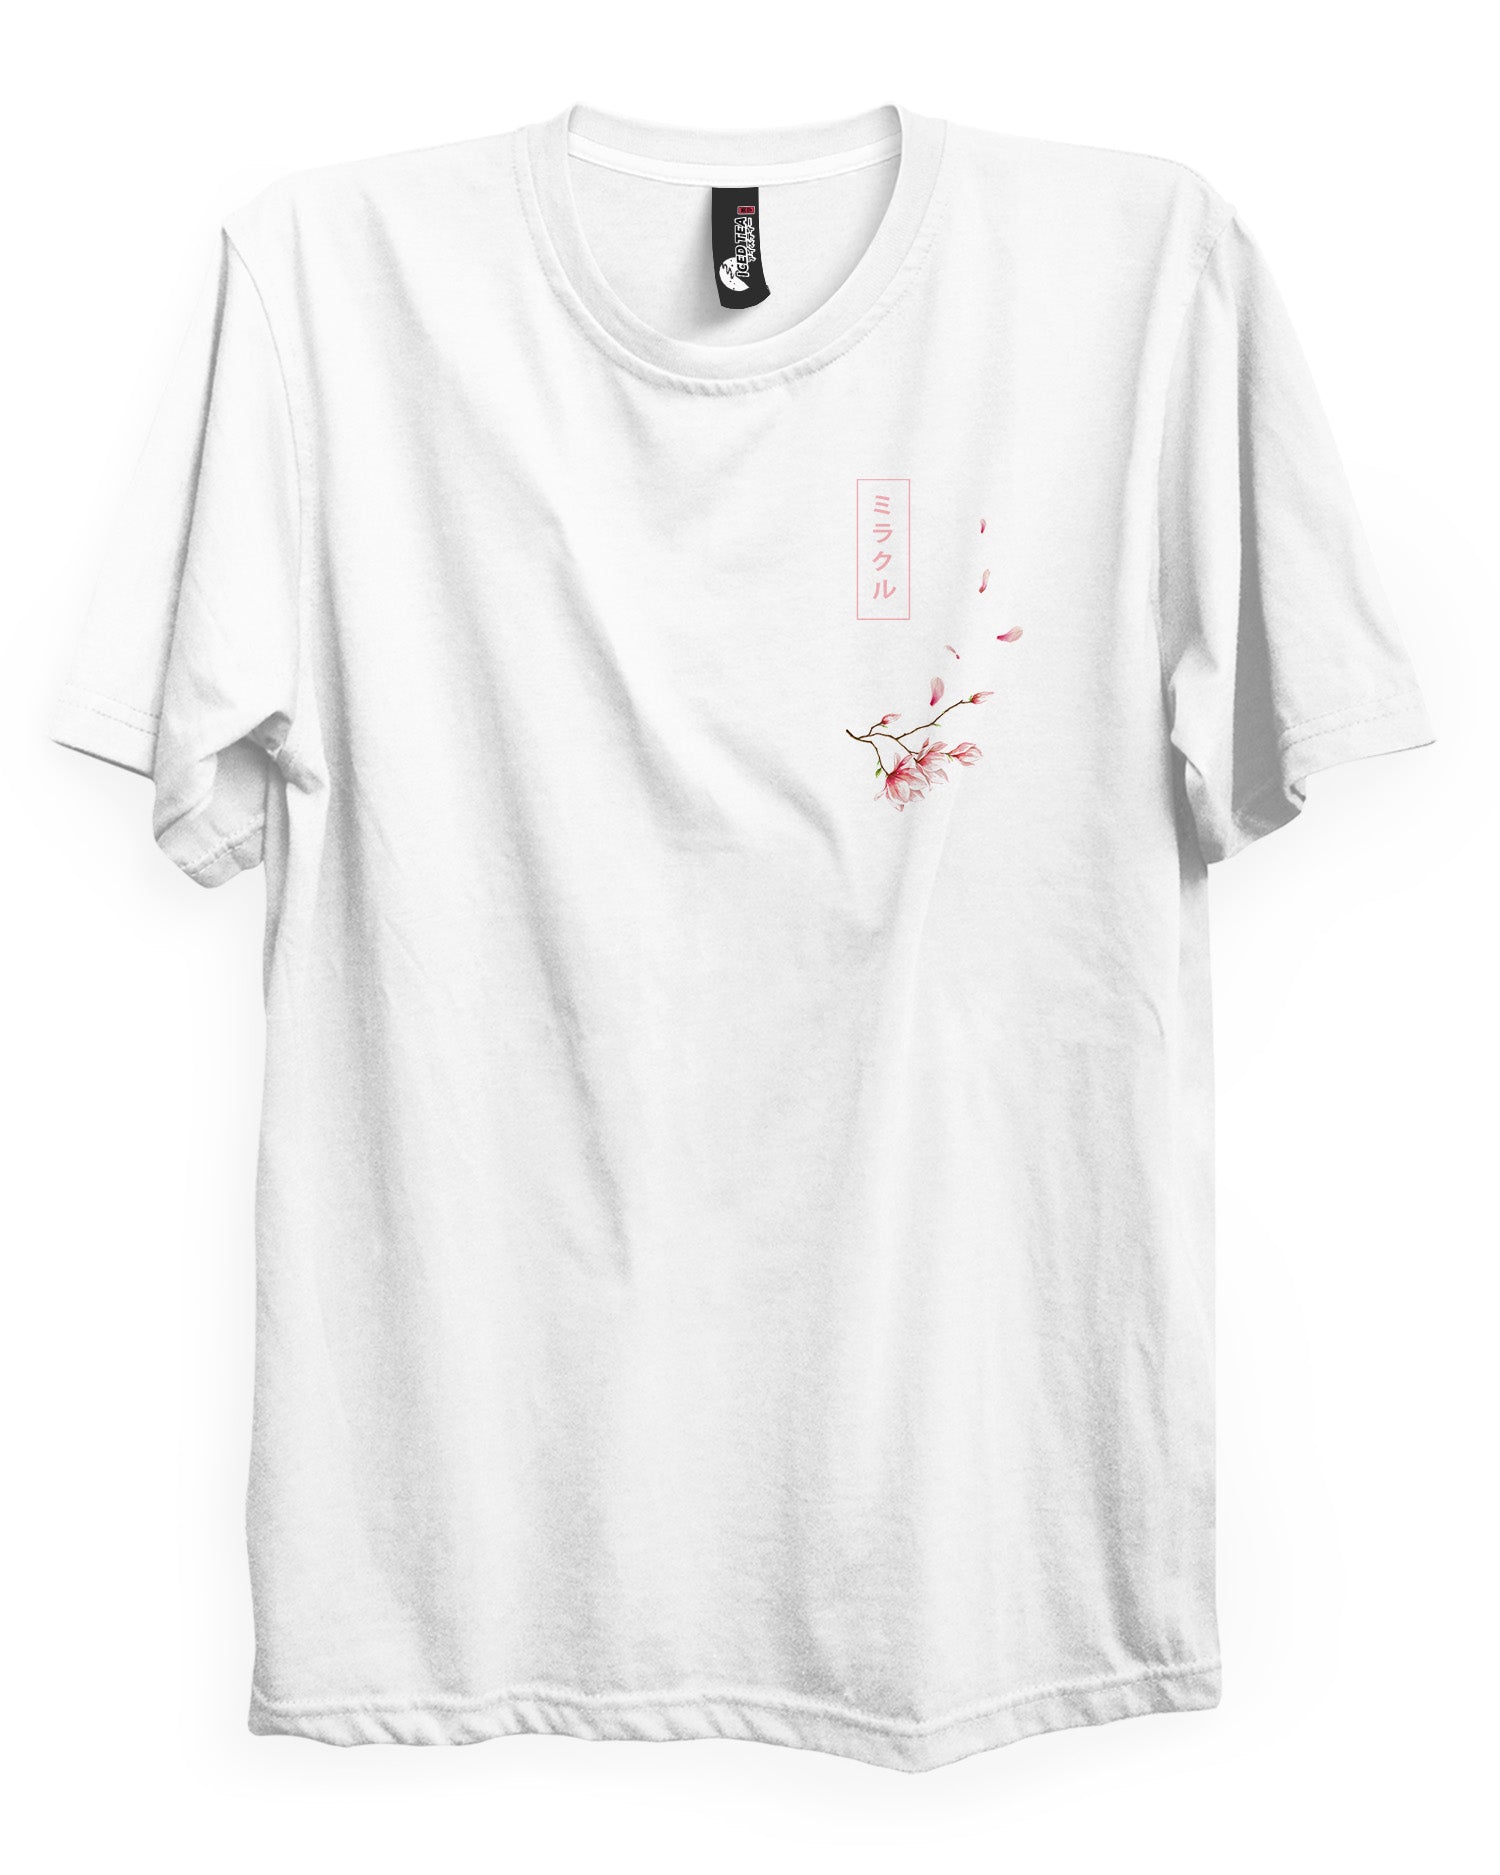 Life (ROSE) - T-Shirt Back Print